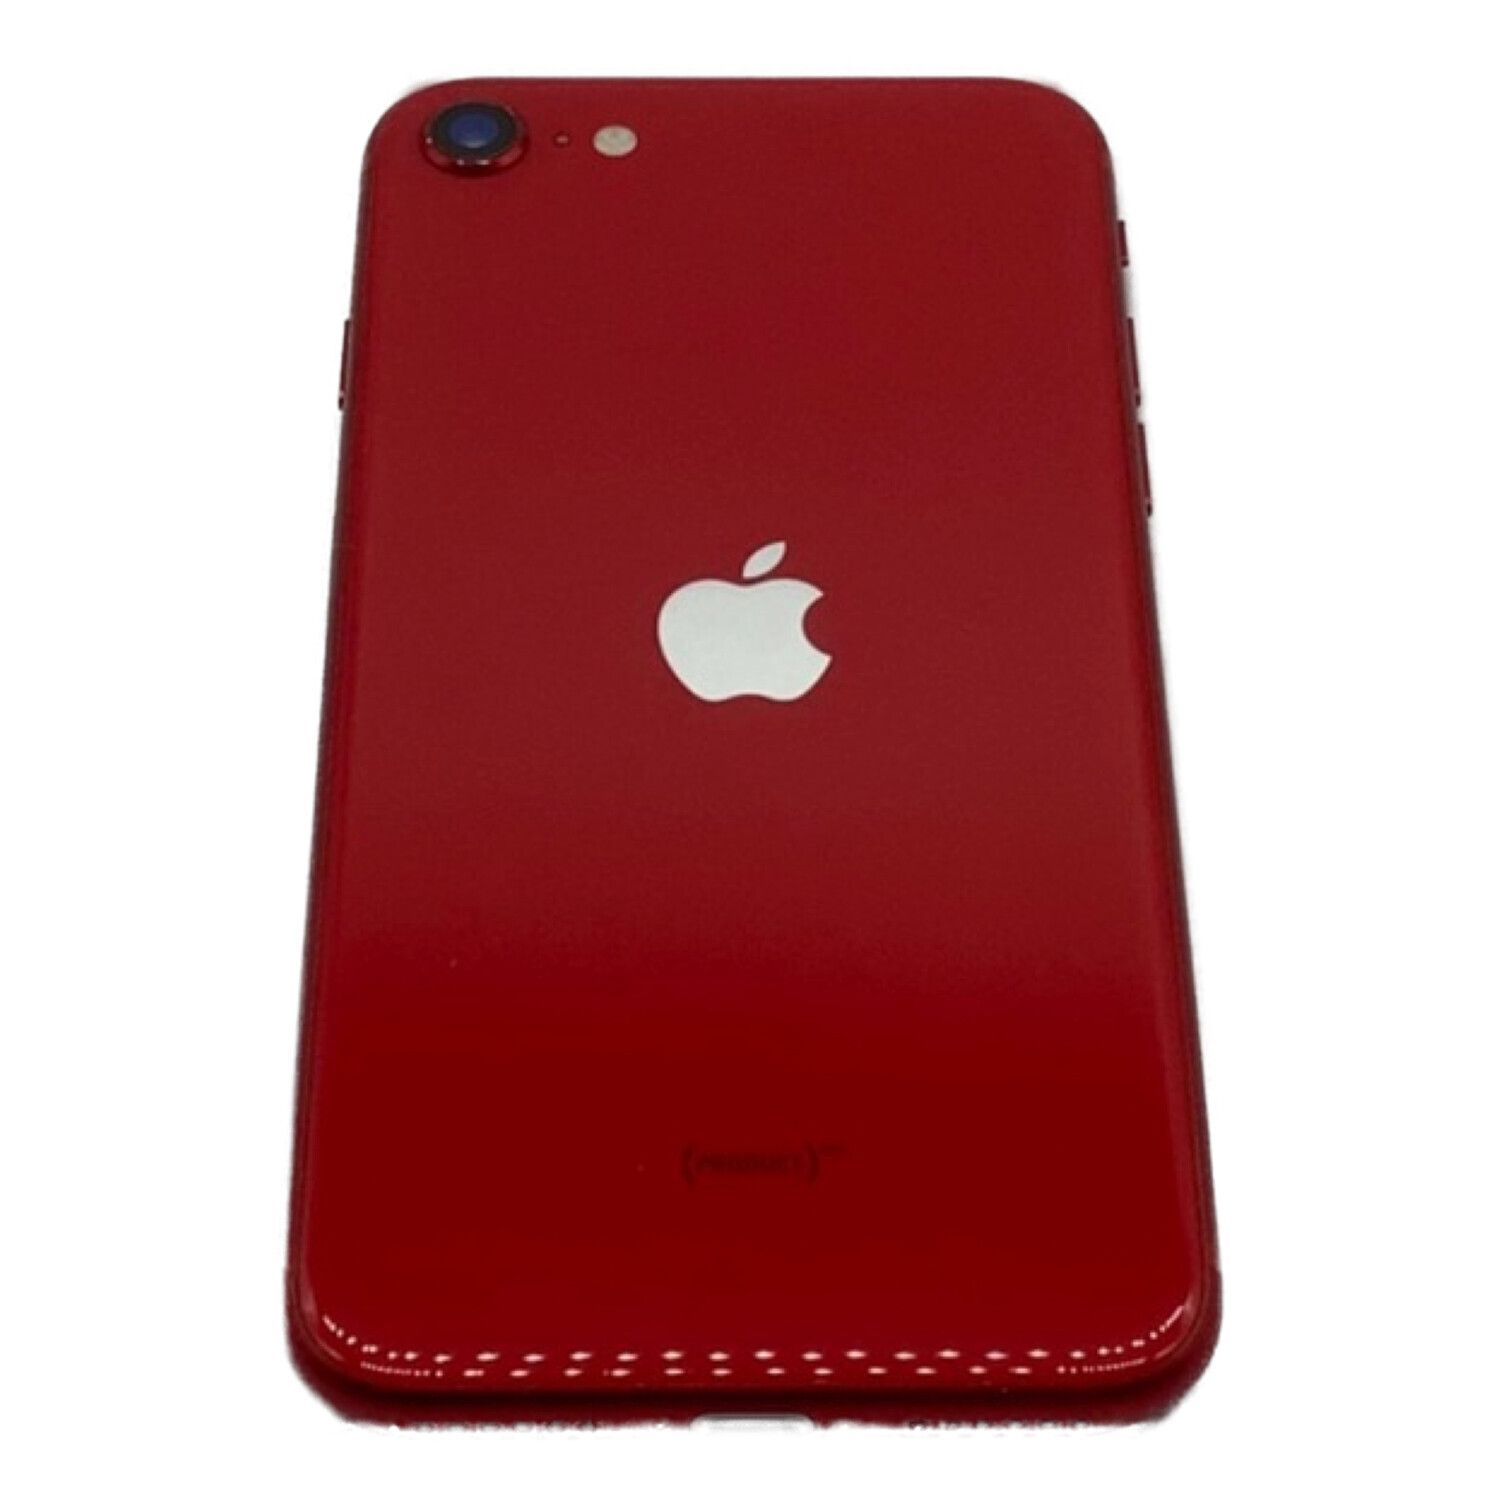 Apple (アップル) iPhone SE(第2世代) MXD22J/A SoftBank 128GB iOS